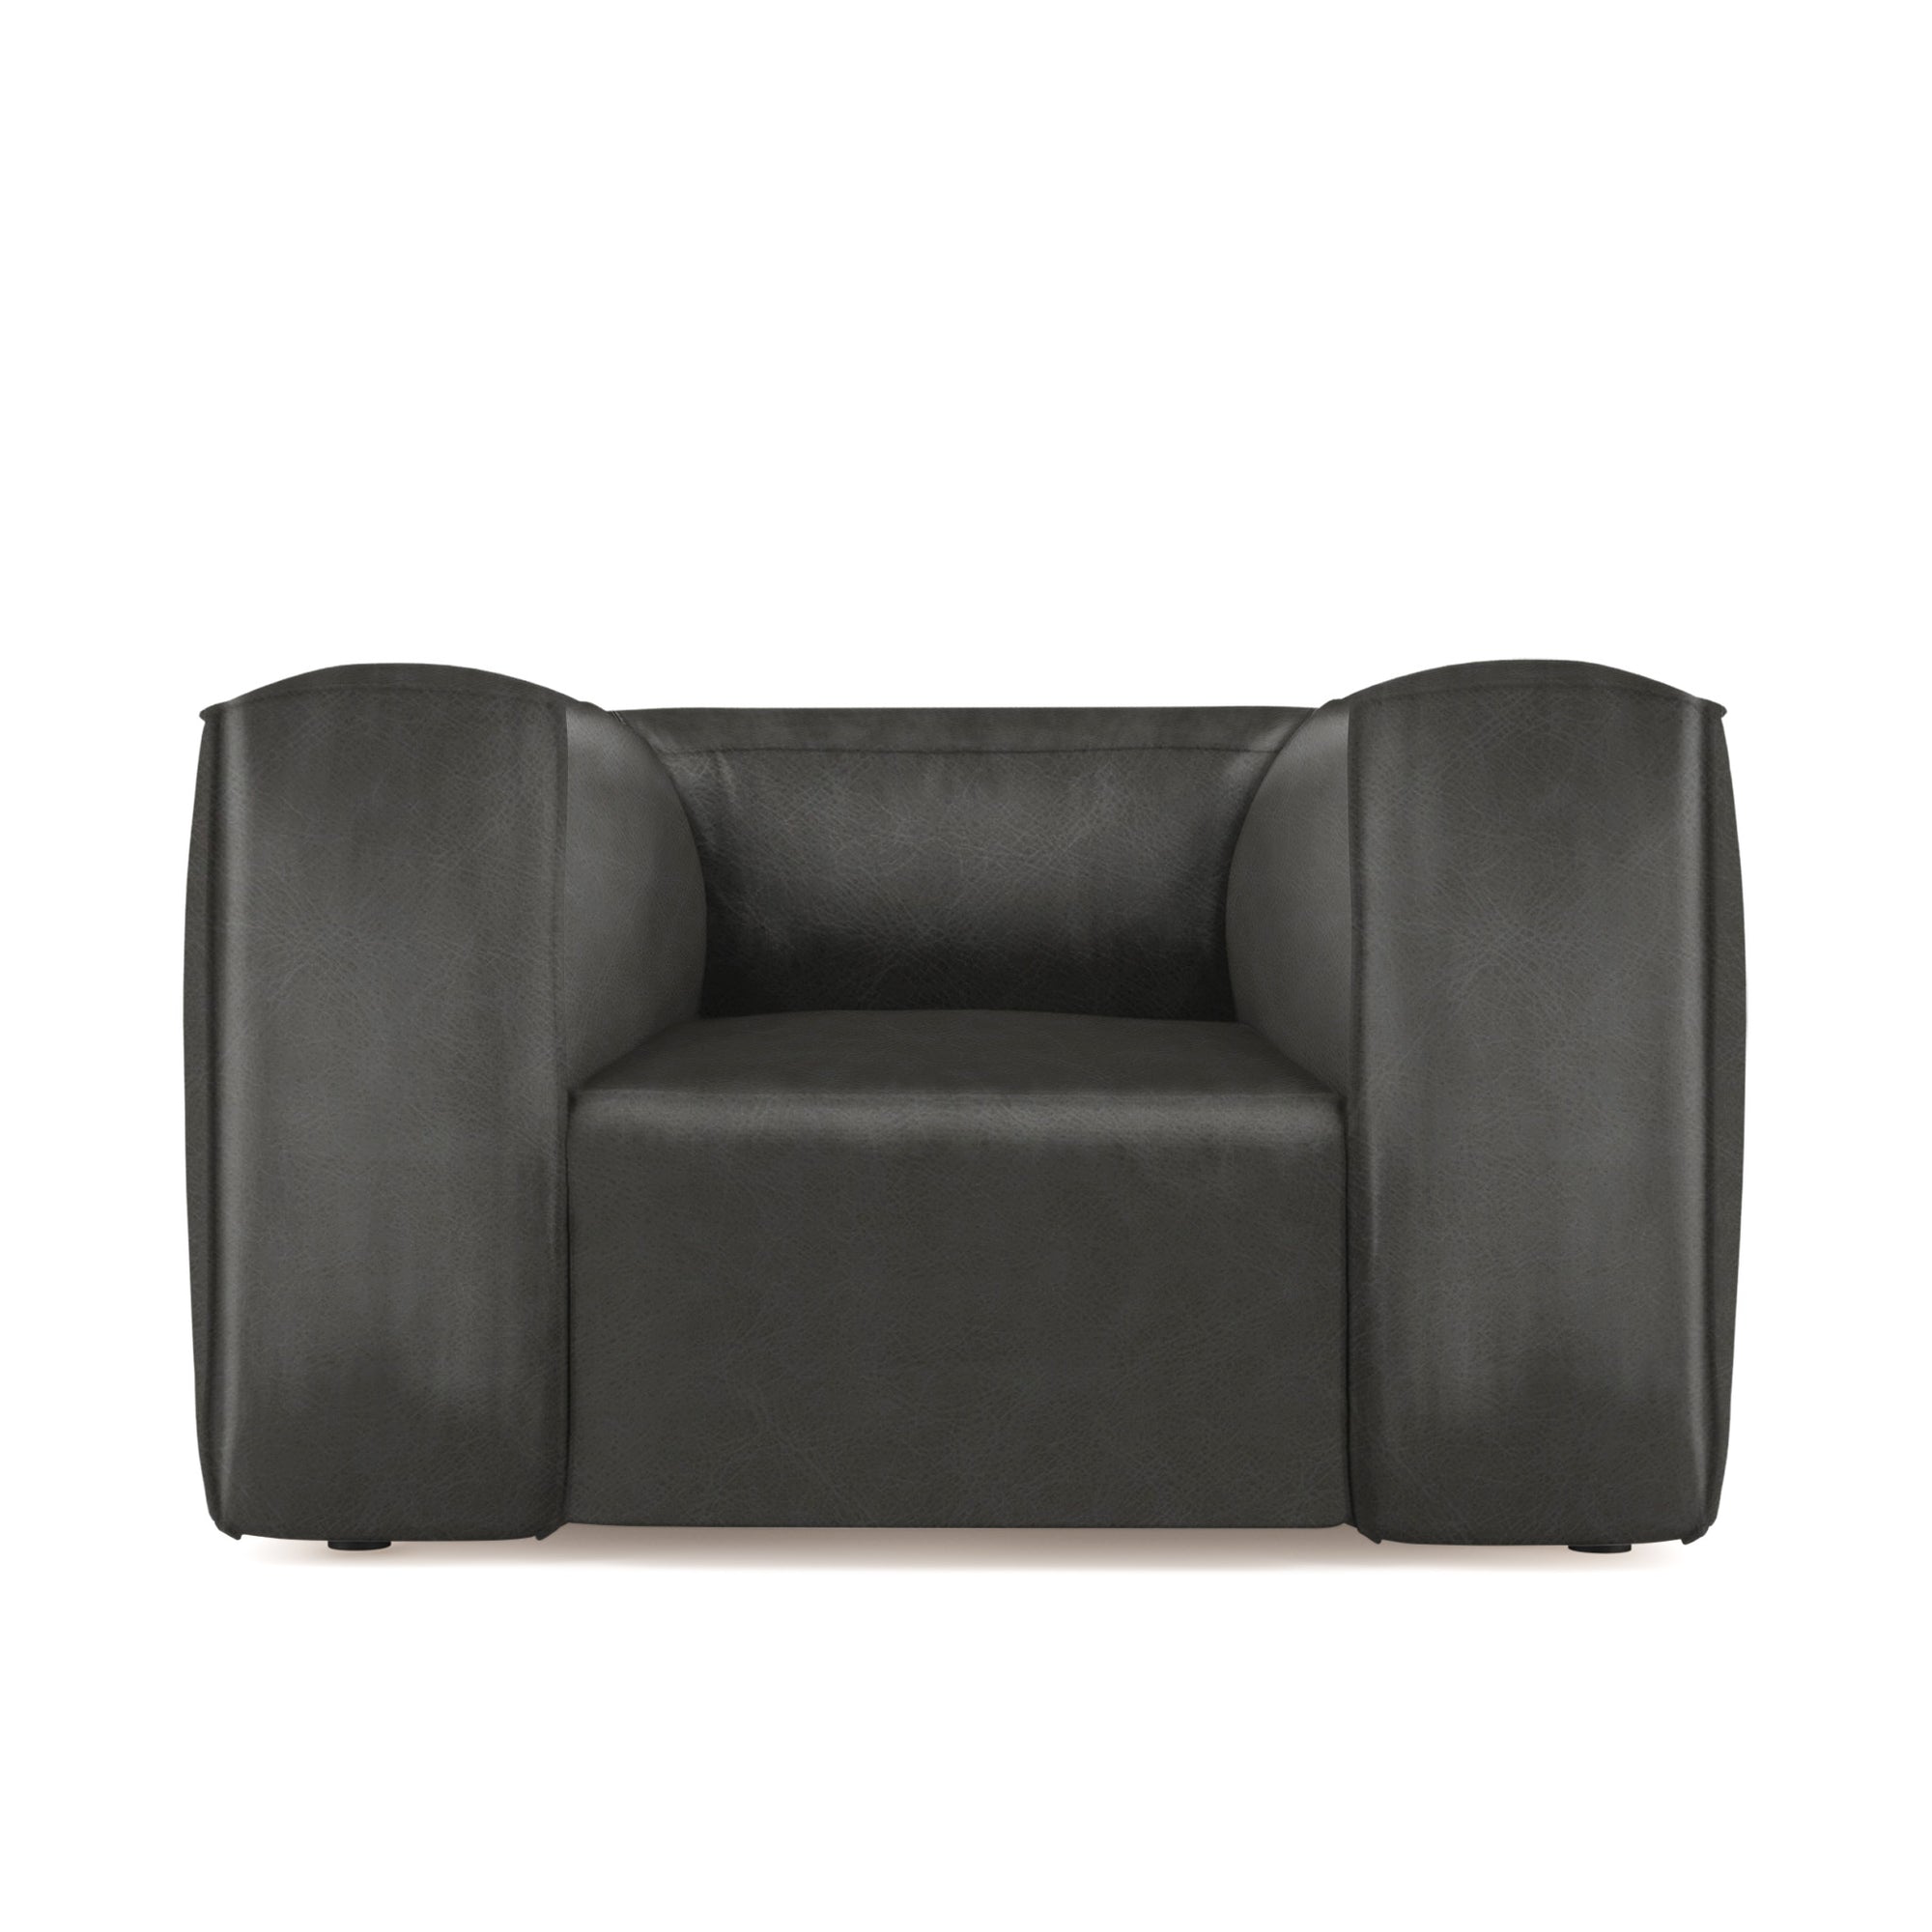 Varick Chair - Graphite Vintage Leather